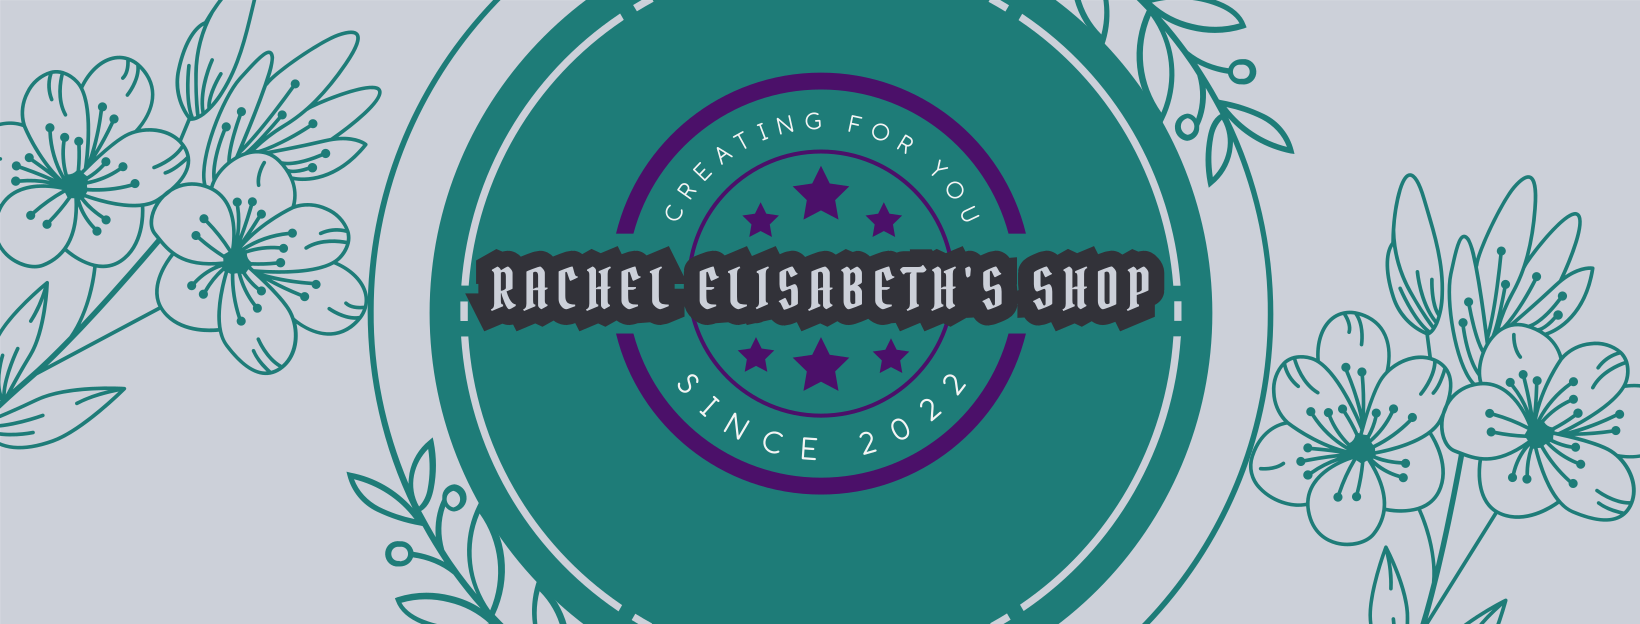 Rachel Elisabeth's Shop